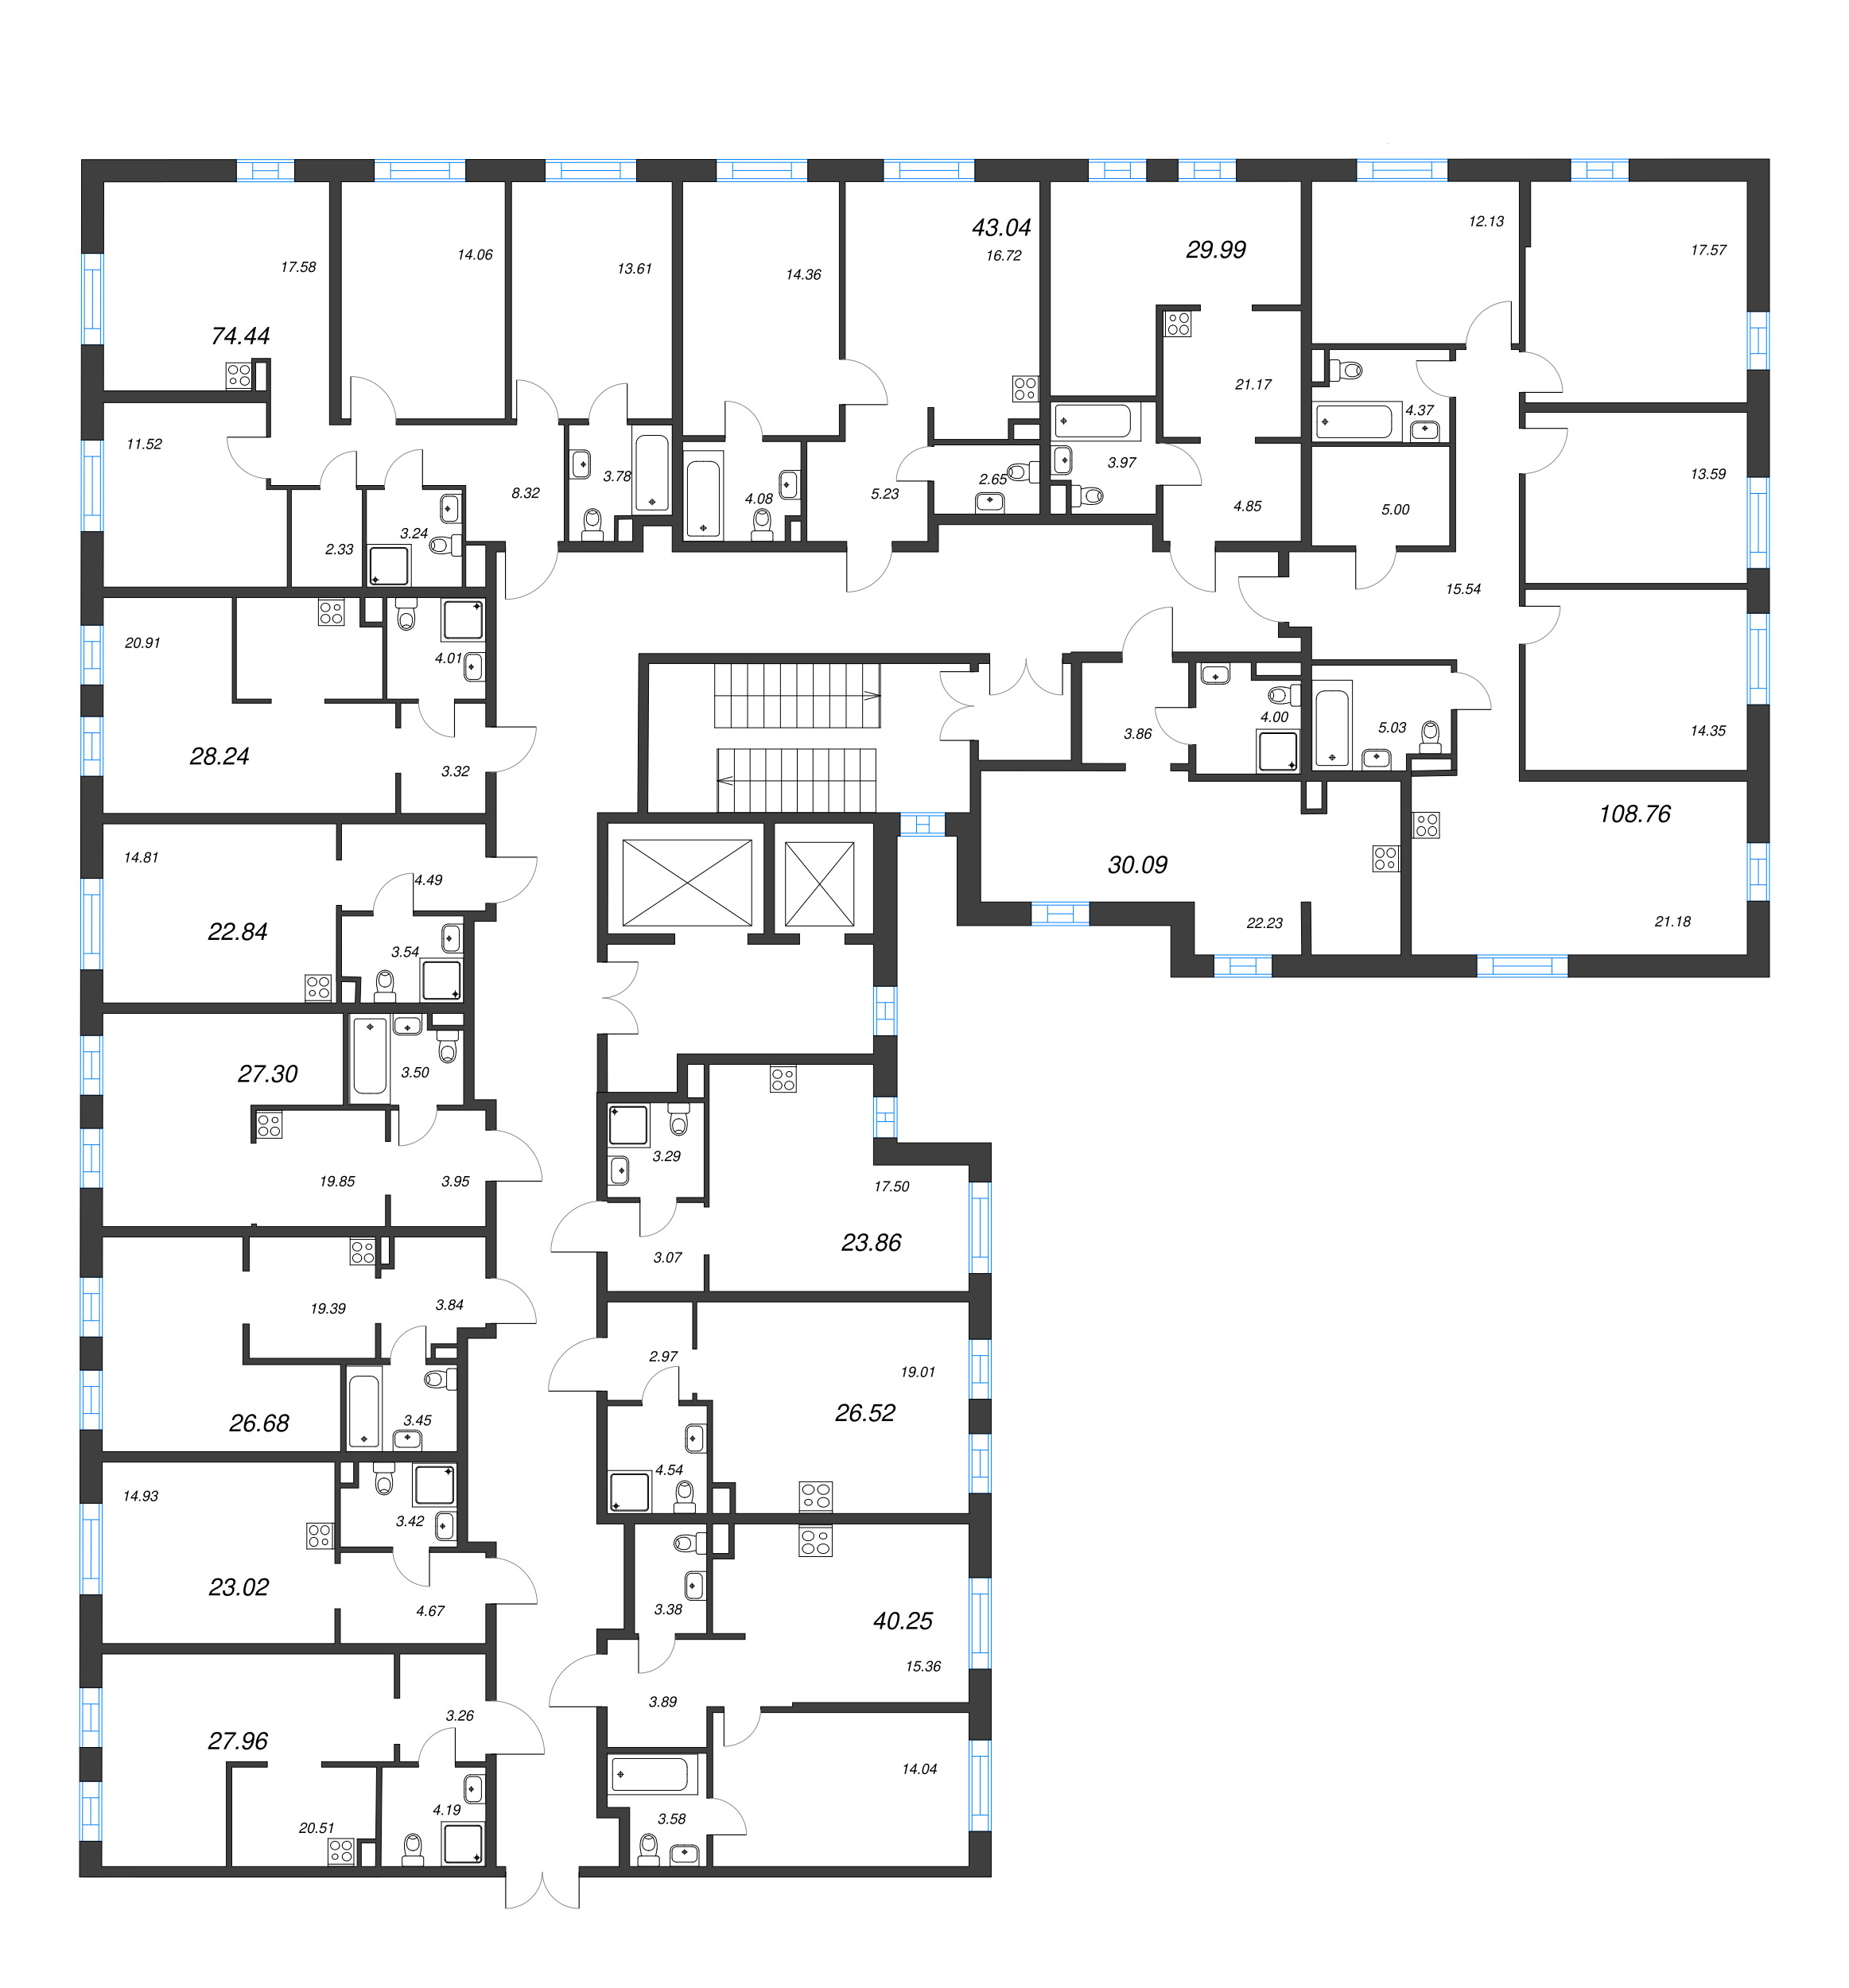 5-комнатная (Евро) квартира, 108.76 м² - планировка этажа